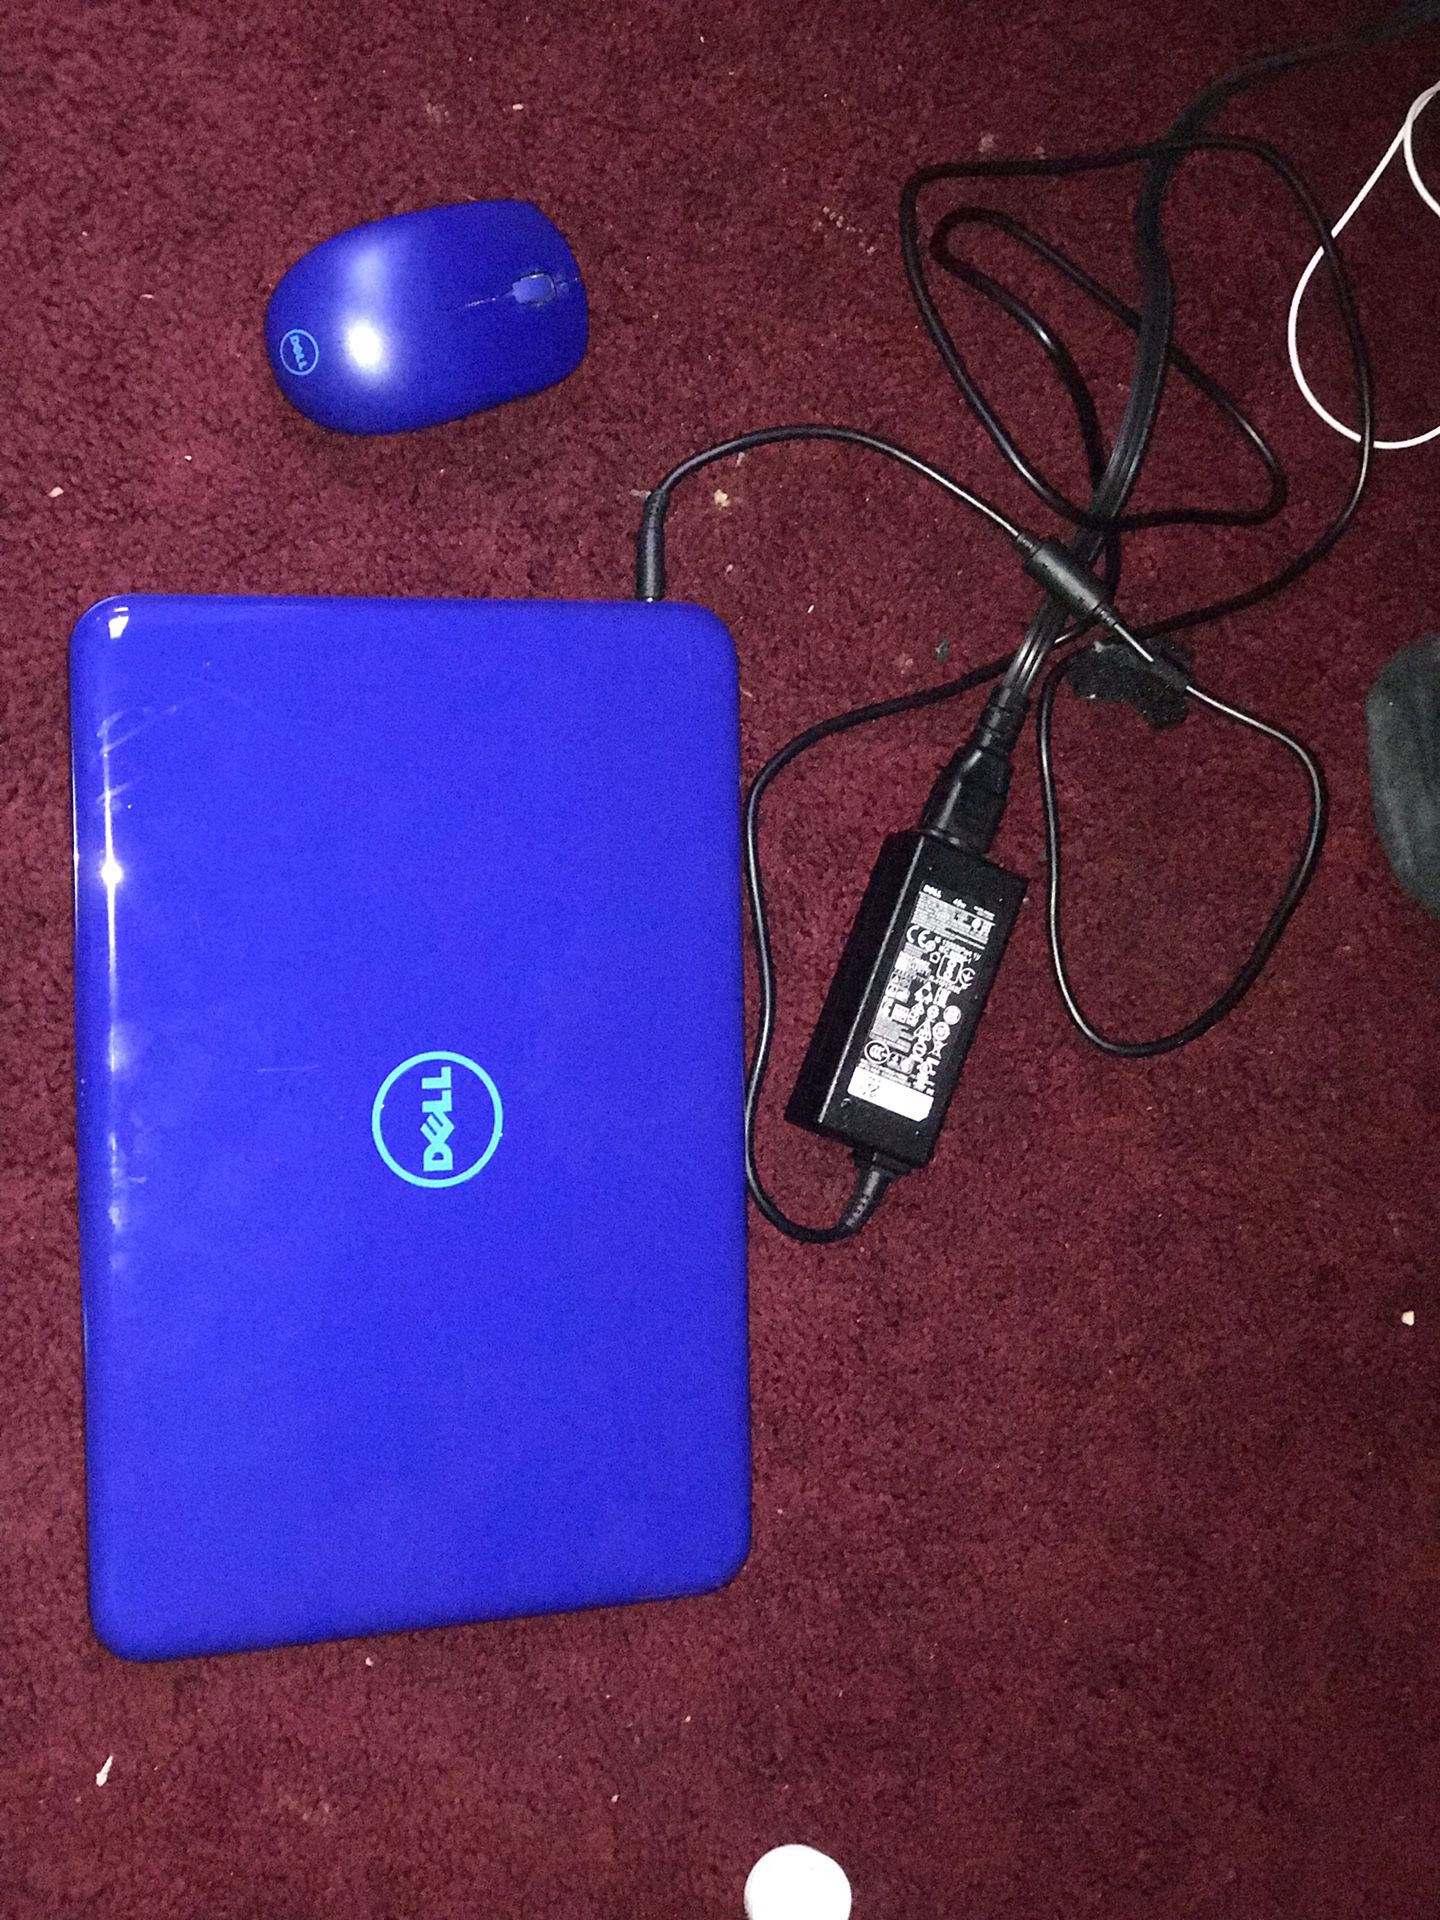 Dell Inspiron laptop